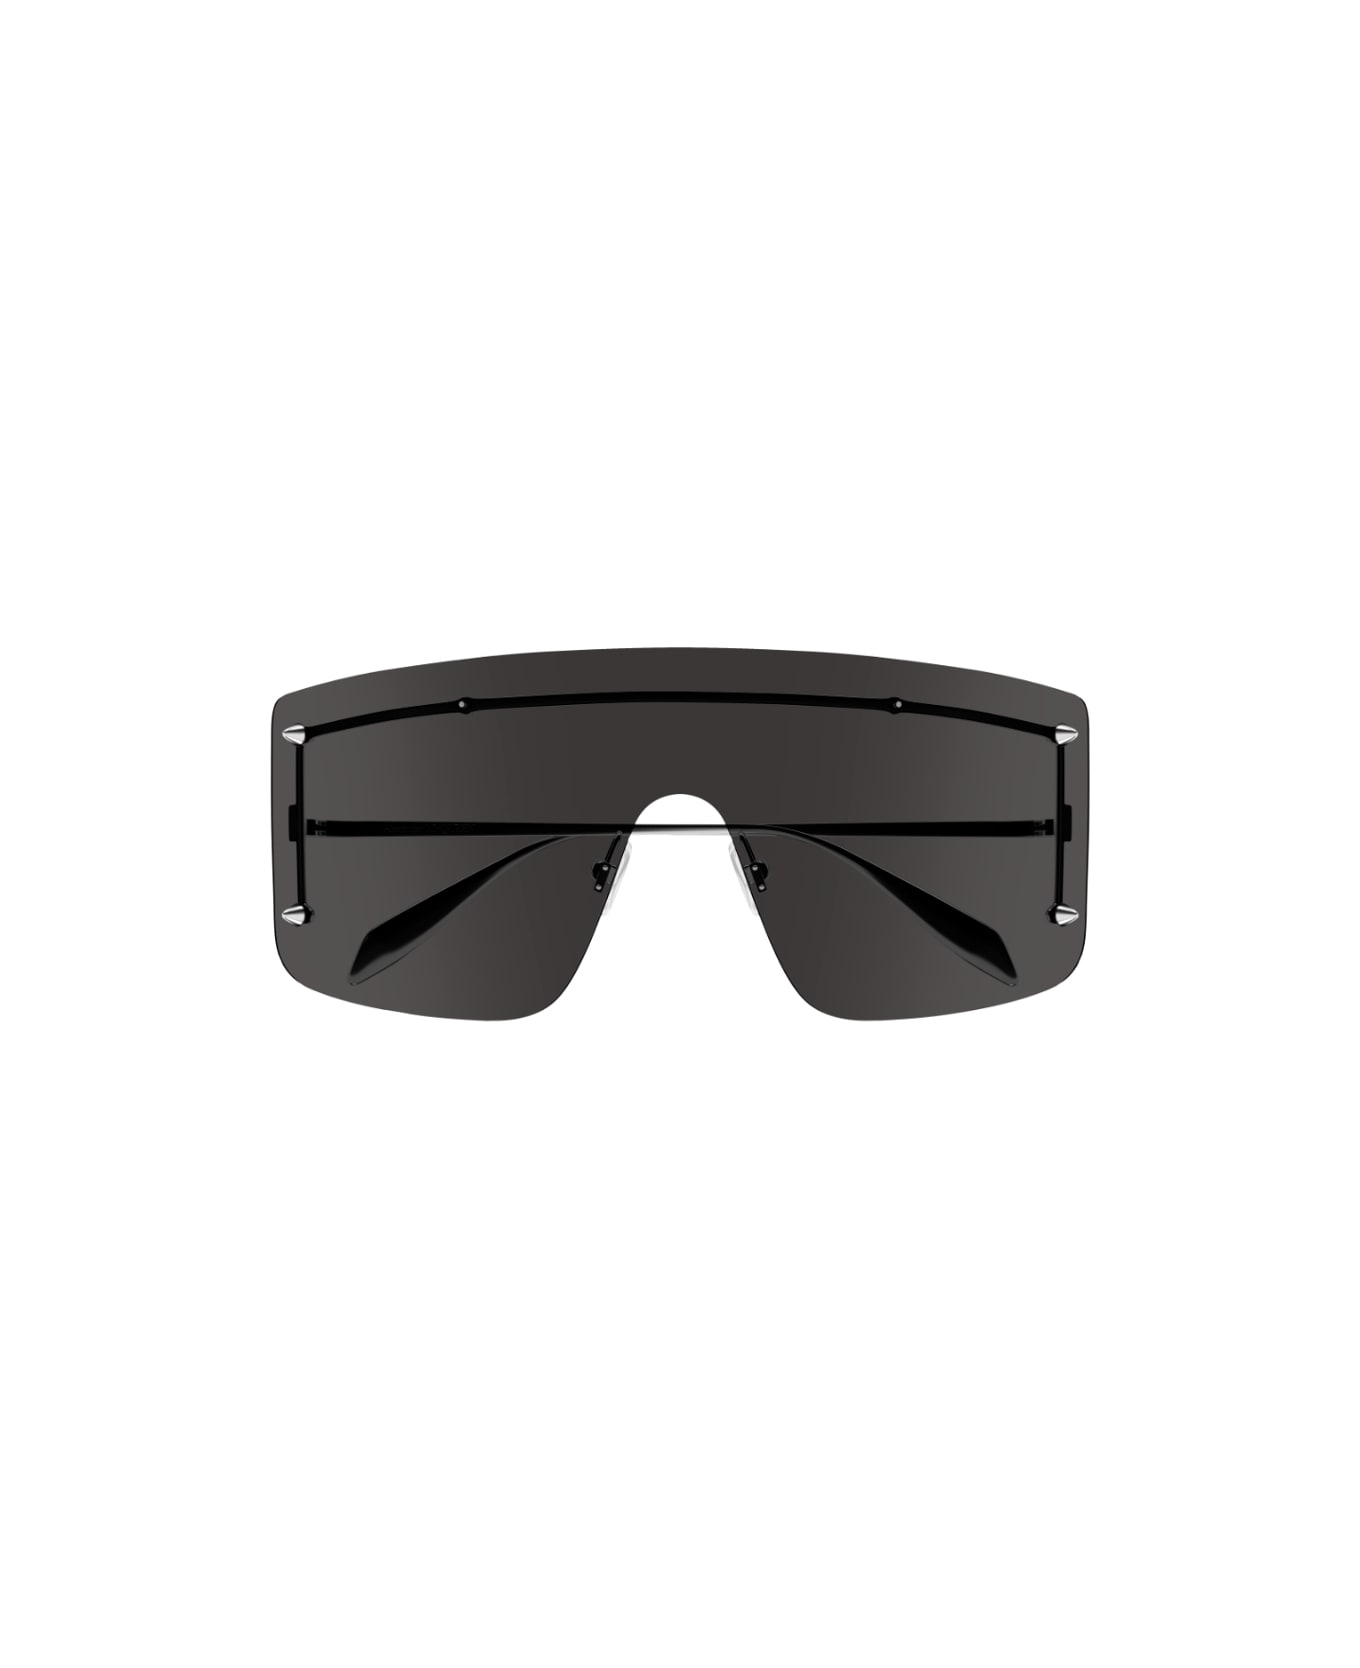 Alexander McQueen Eyewear AM0412s 001 Morgan Sunglasses - Nero